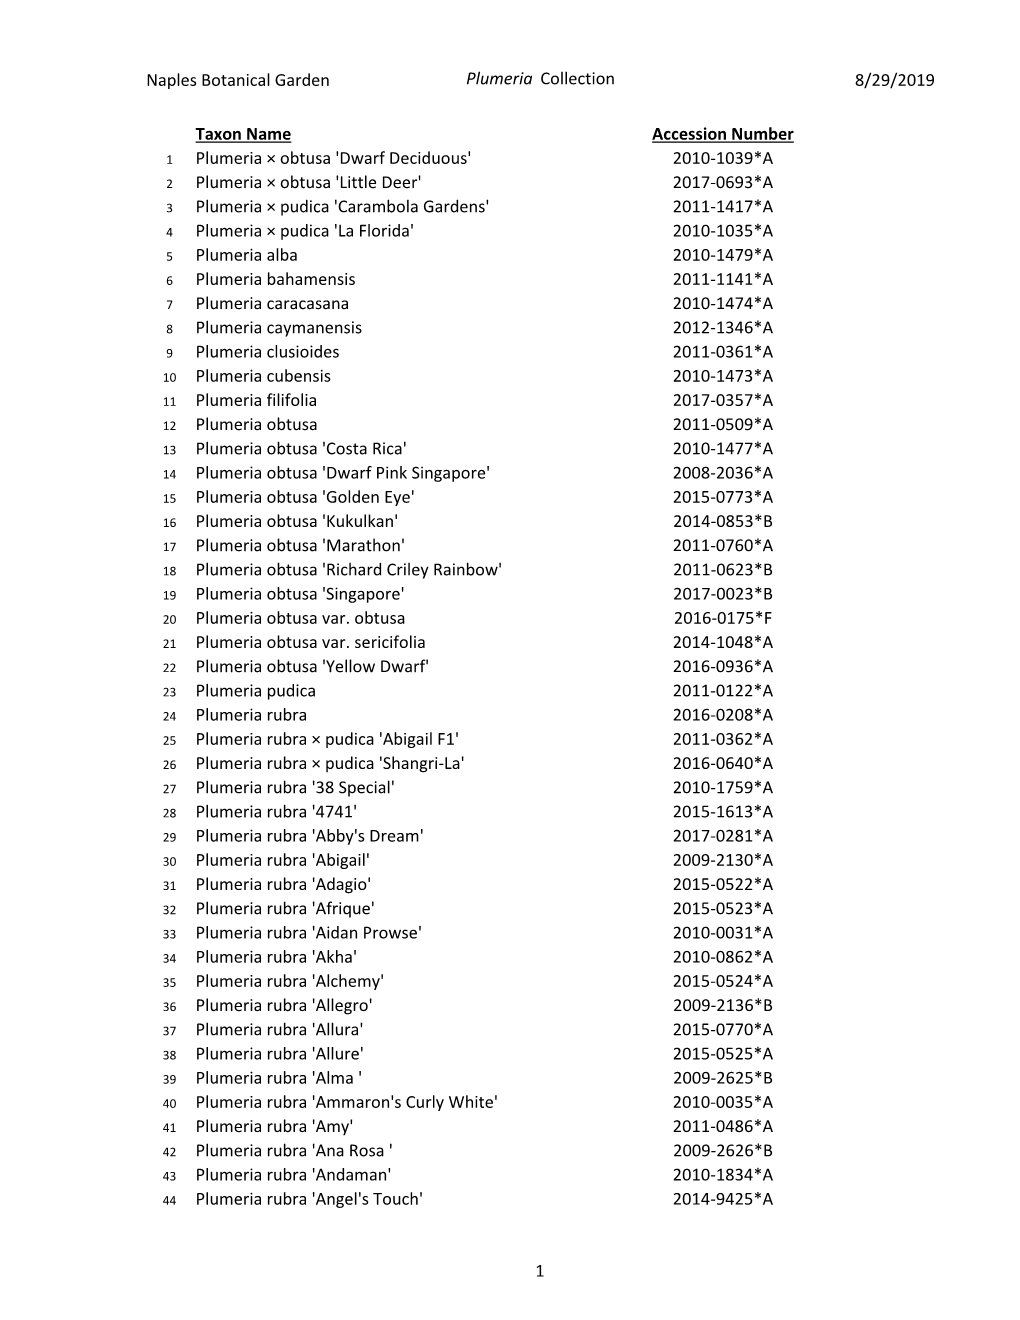 Download 2019 Plumeria Collection List of Plants.Pdf